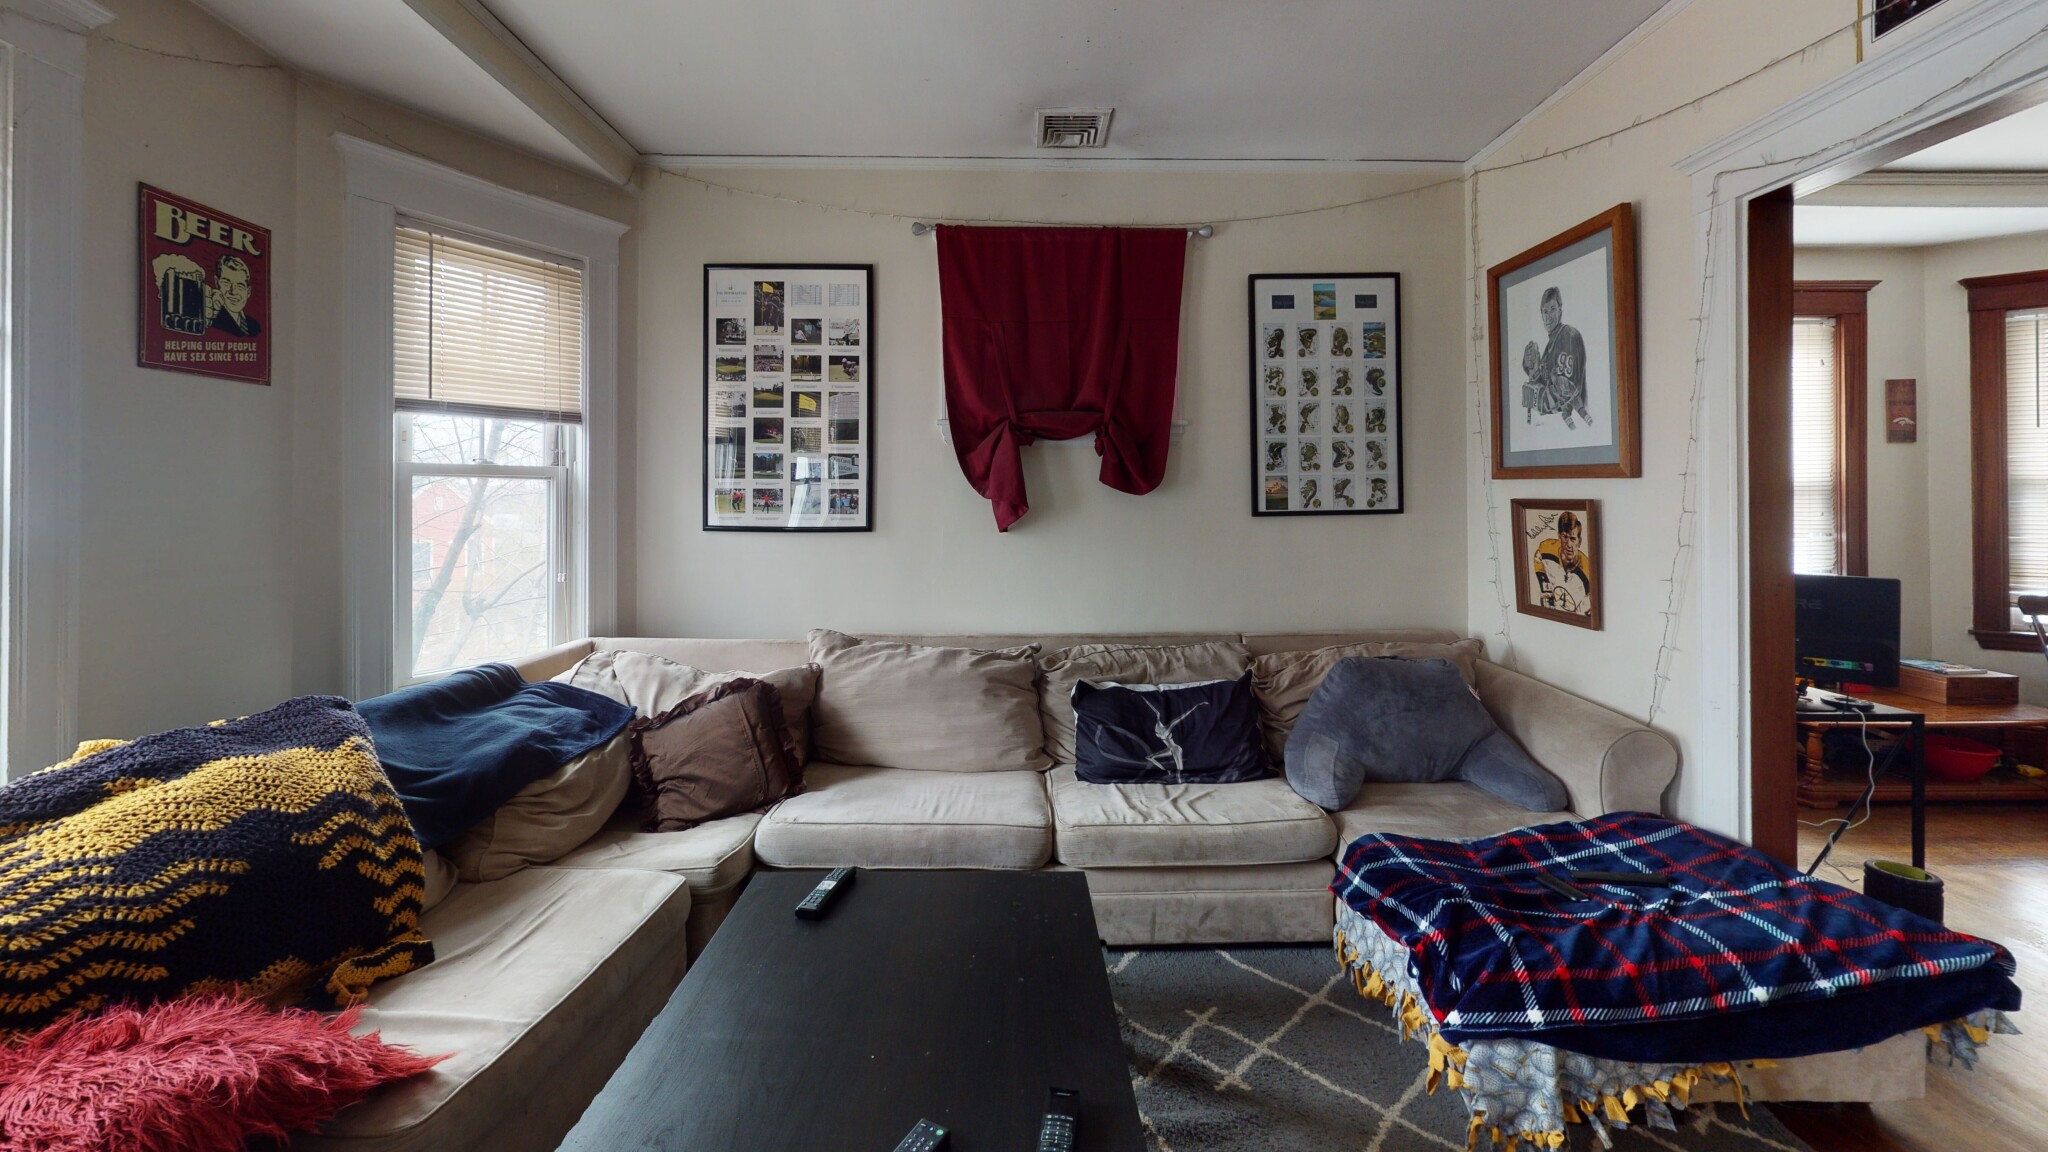 Photos of apartment on Brooksdale Rd.,Boston MA 02135